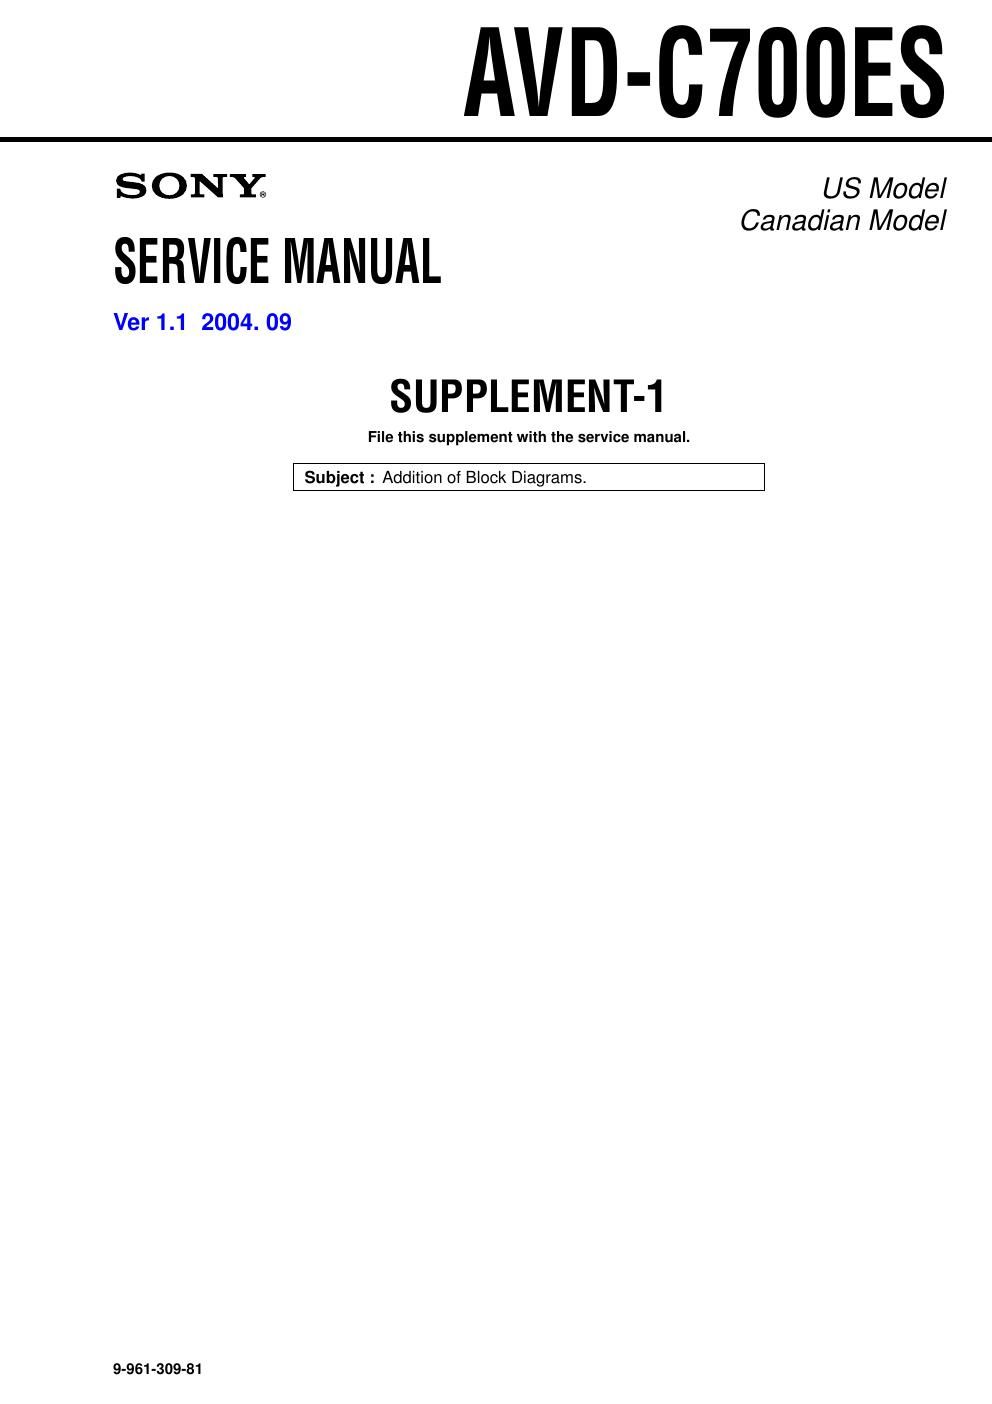 sony avd c 700 es service manual